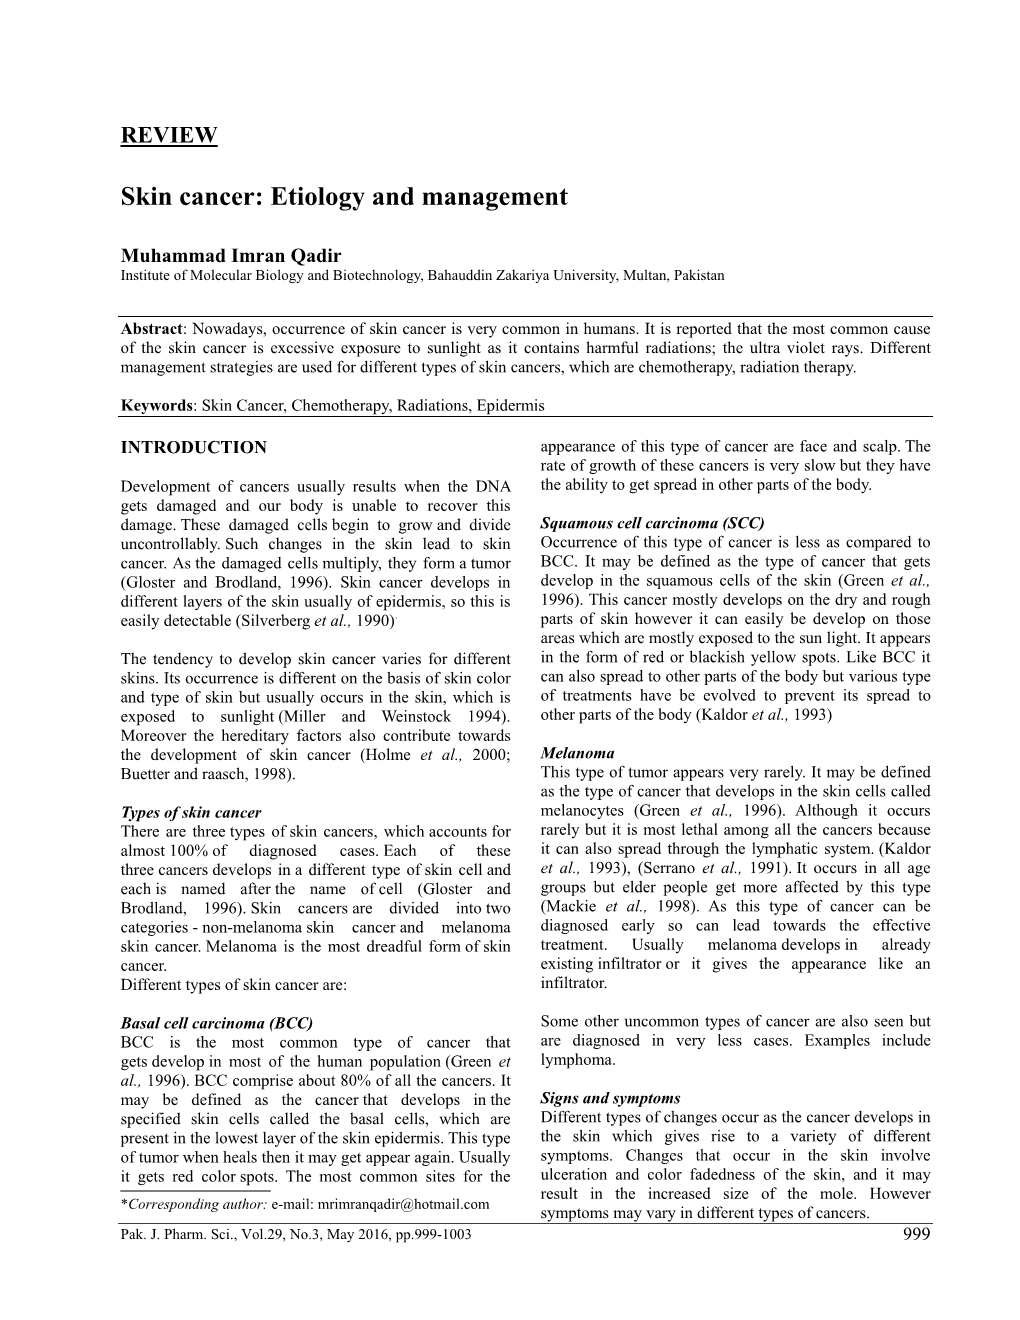 Skin Cancer: Etiology and Management